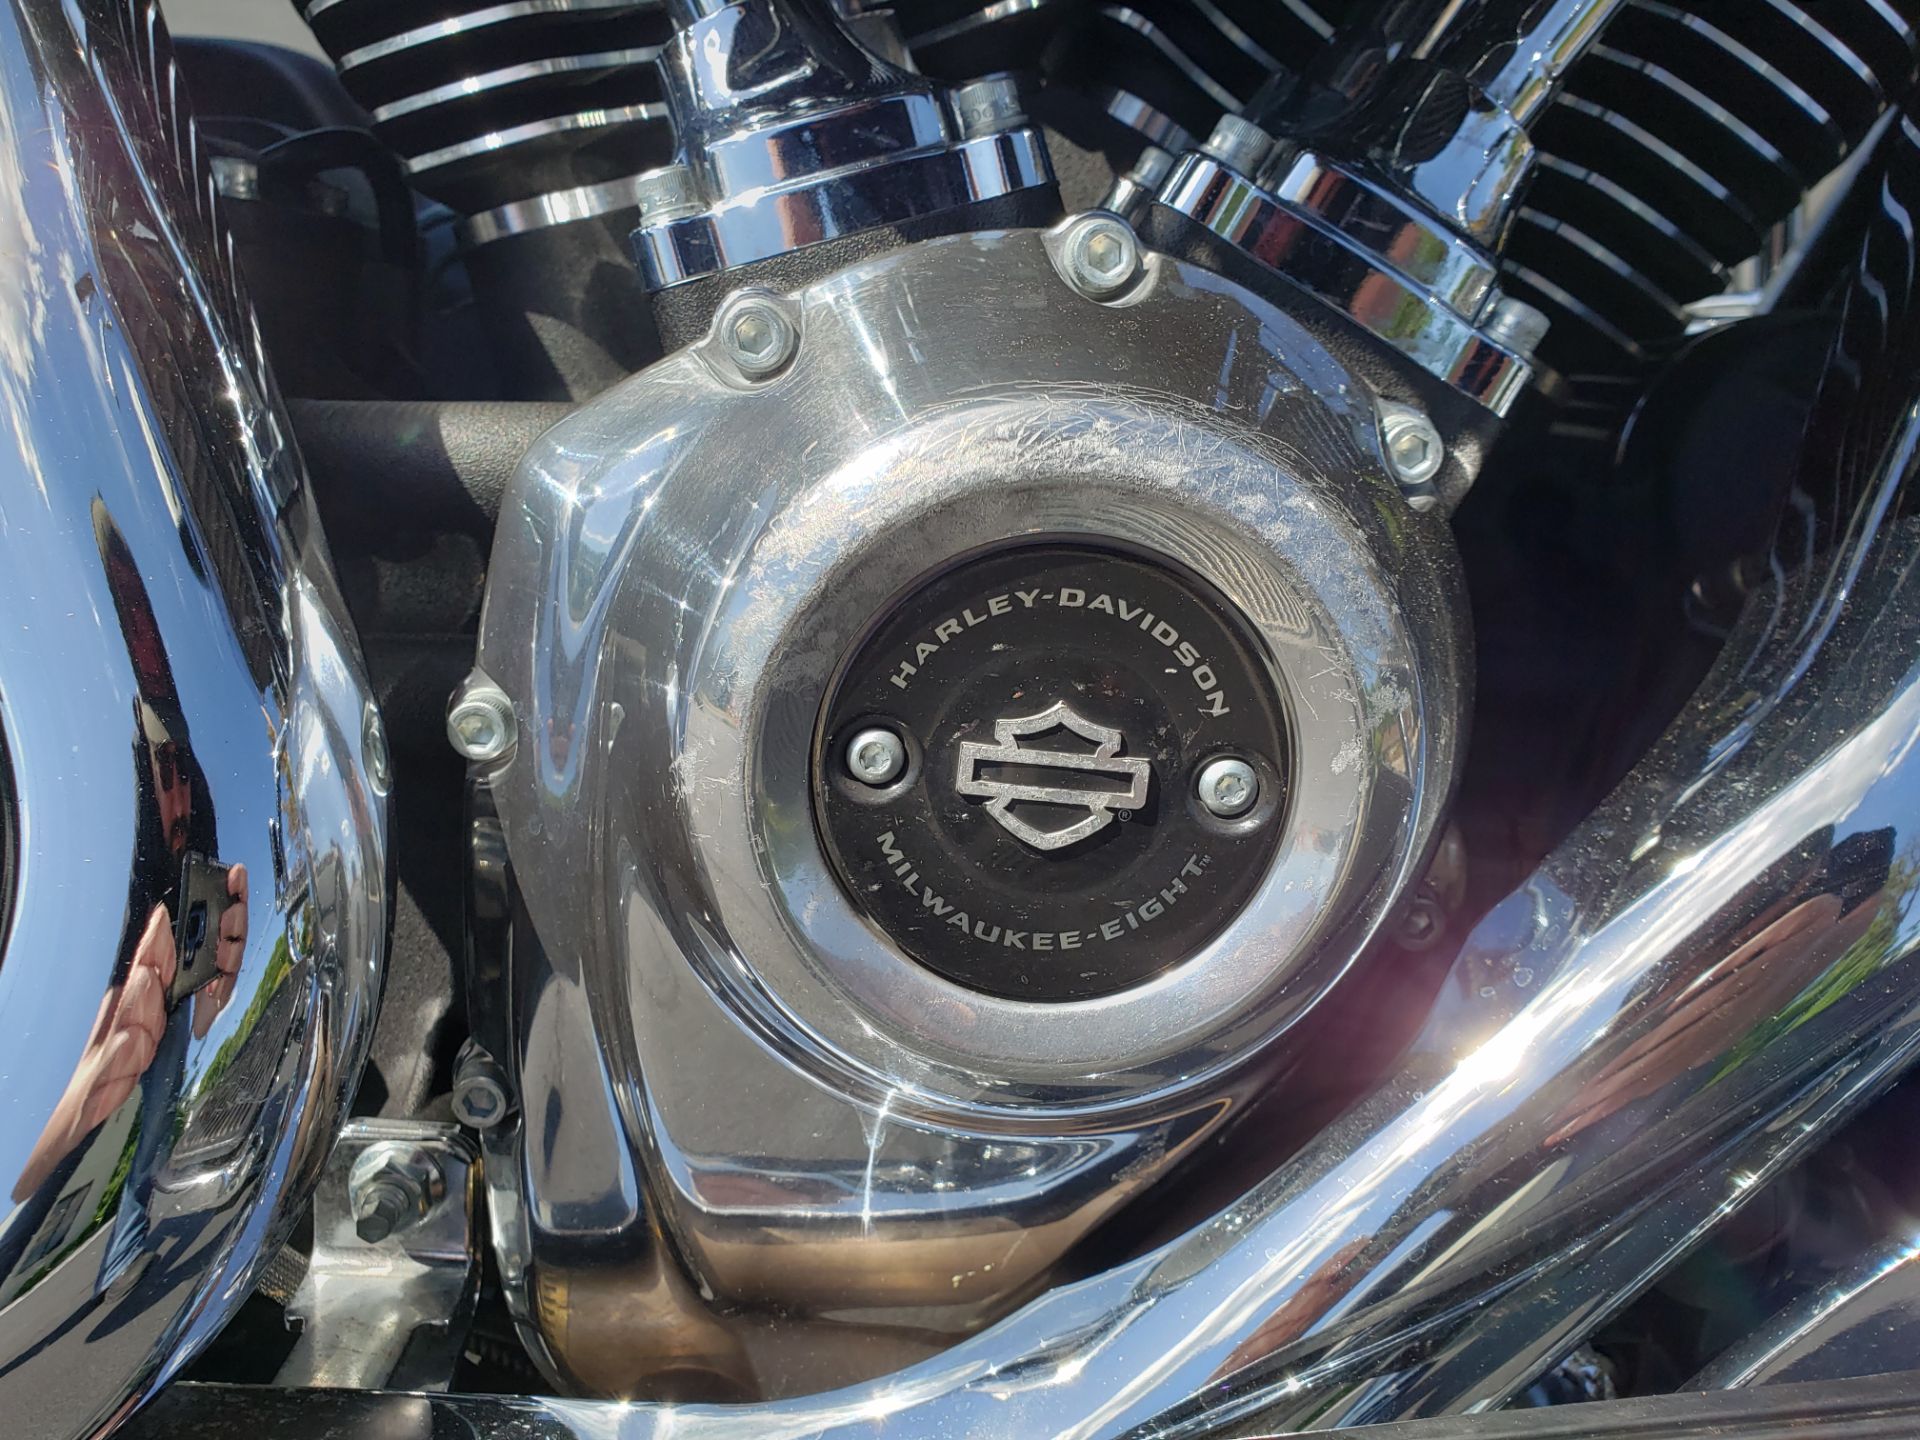 2019 Harley-Davidson Electra Glide® Standard in Lynchburg, Virginia - Photo 18